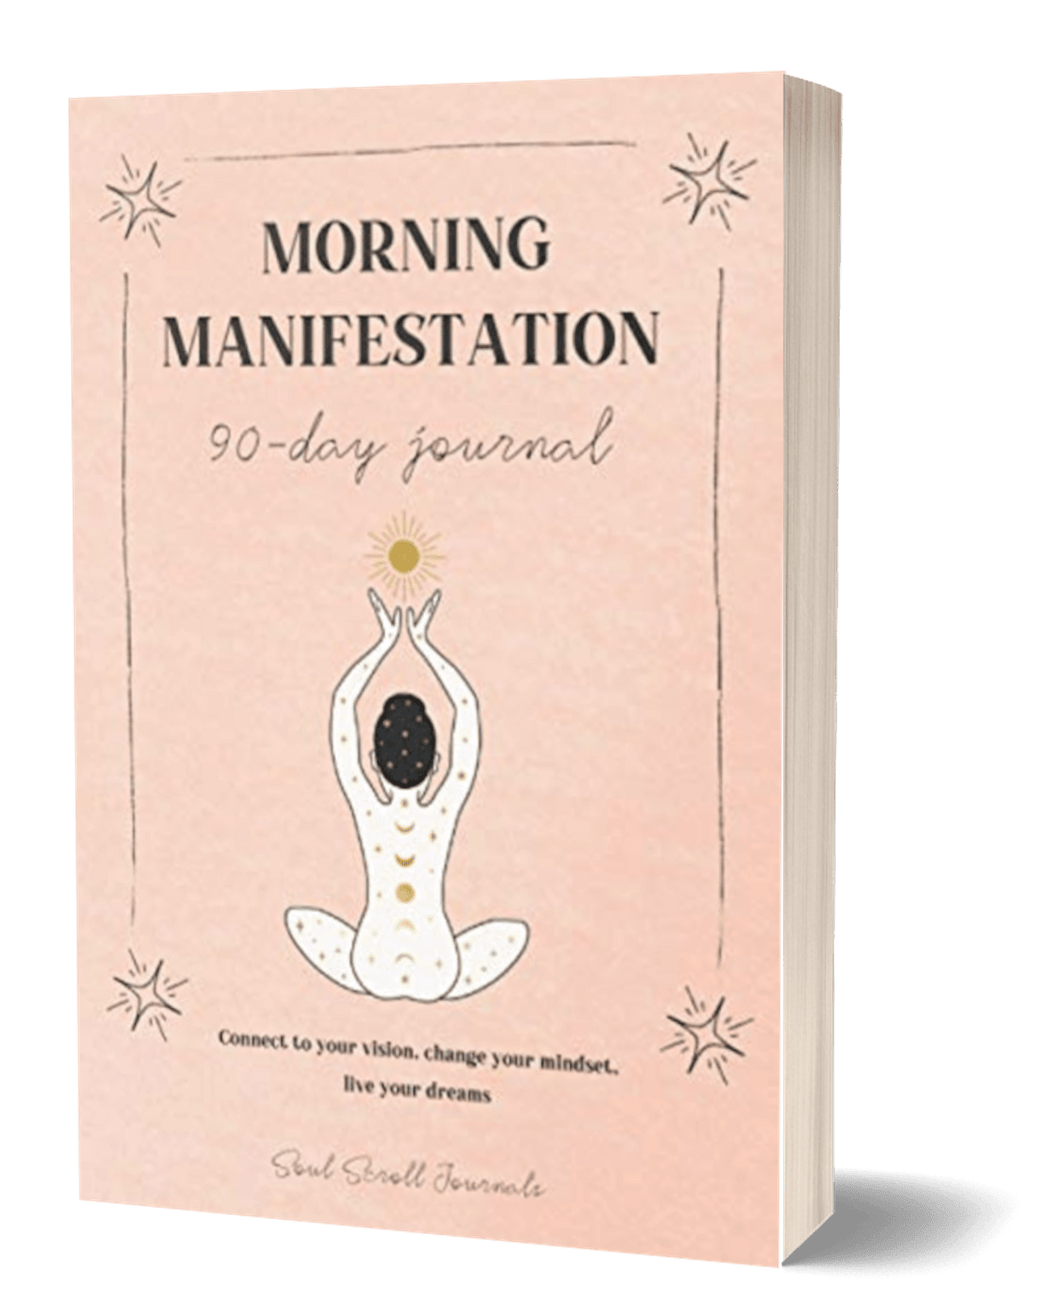 Morning manifestation journal (Book or PDF)